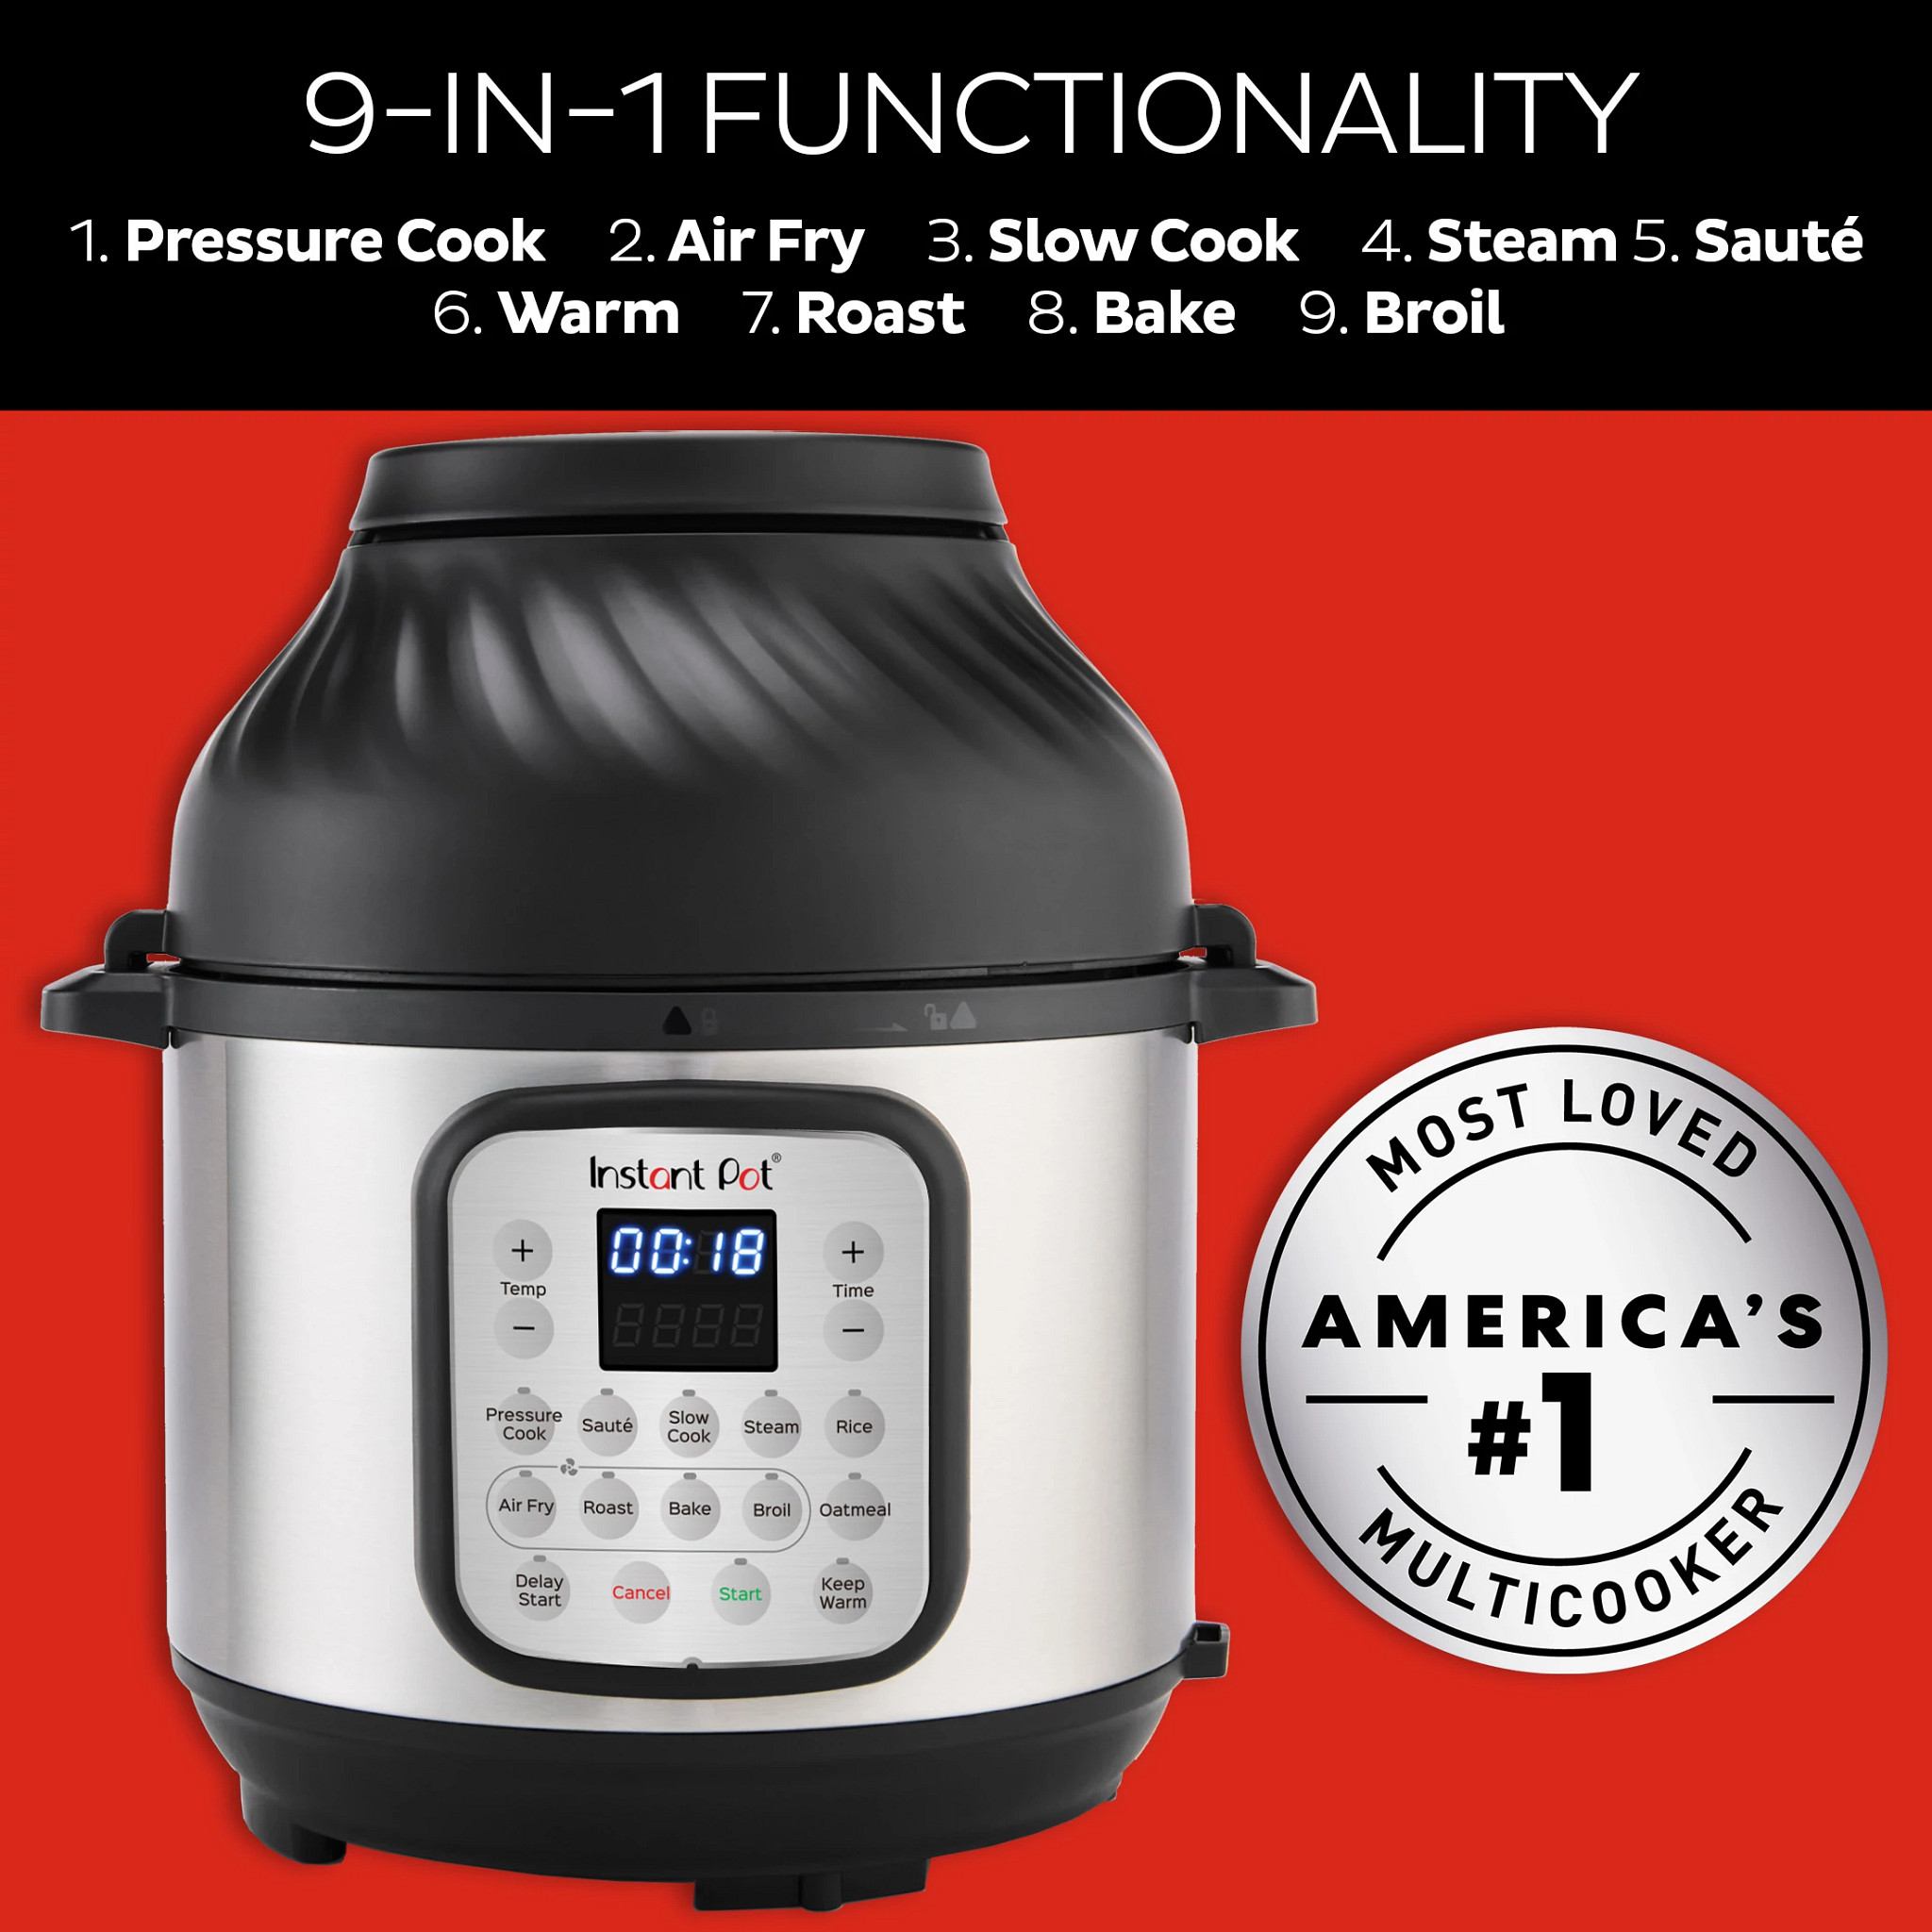 Instant Pot 8 Quart Crisp Multi-Cooker + Air Fryer, 9-in-1: Pressure Cook, Steam, Slow Cook, Sauté, Air Fry, Bake, Broil, Roast, Keep Warm, Rice, Oatmeal - image 4 of 17